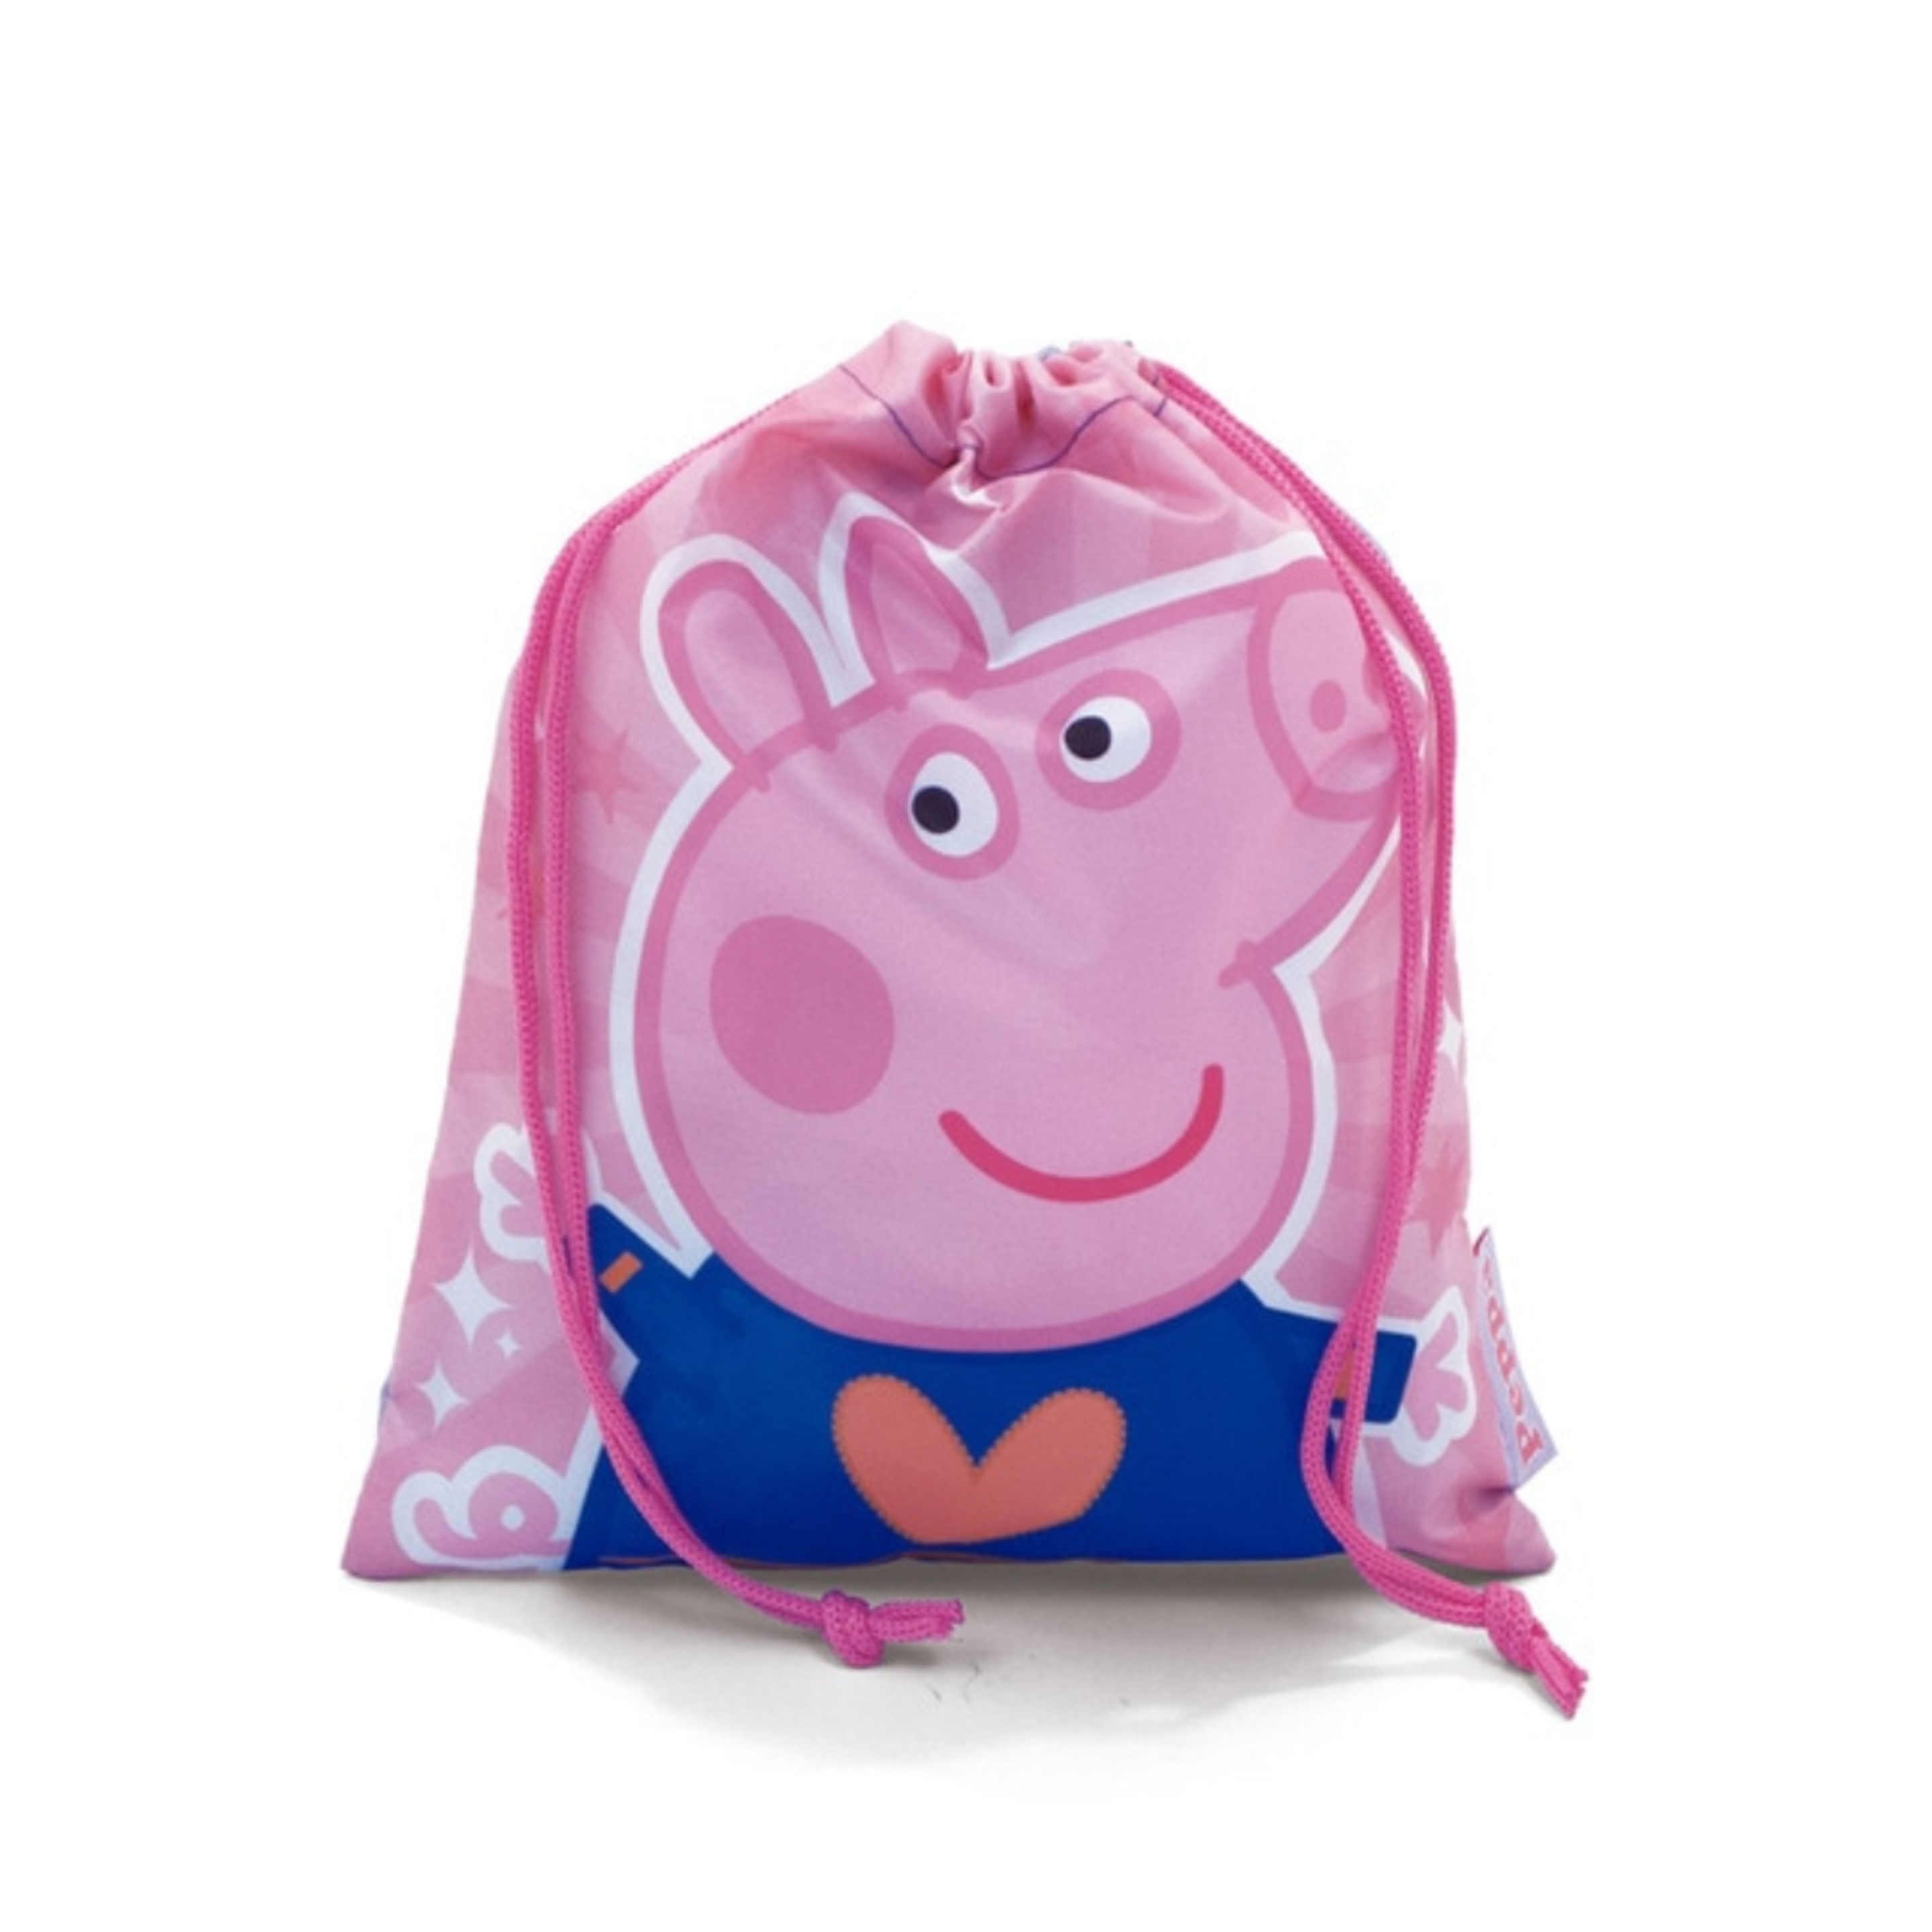 Saco Peppa Pig 66012 - rosa - 